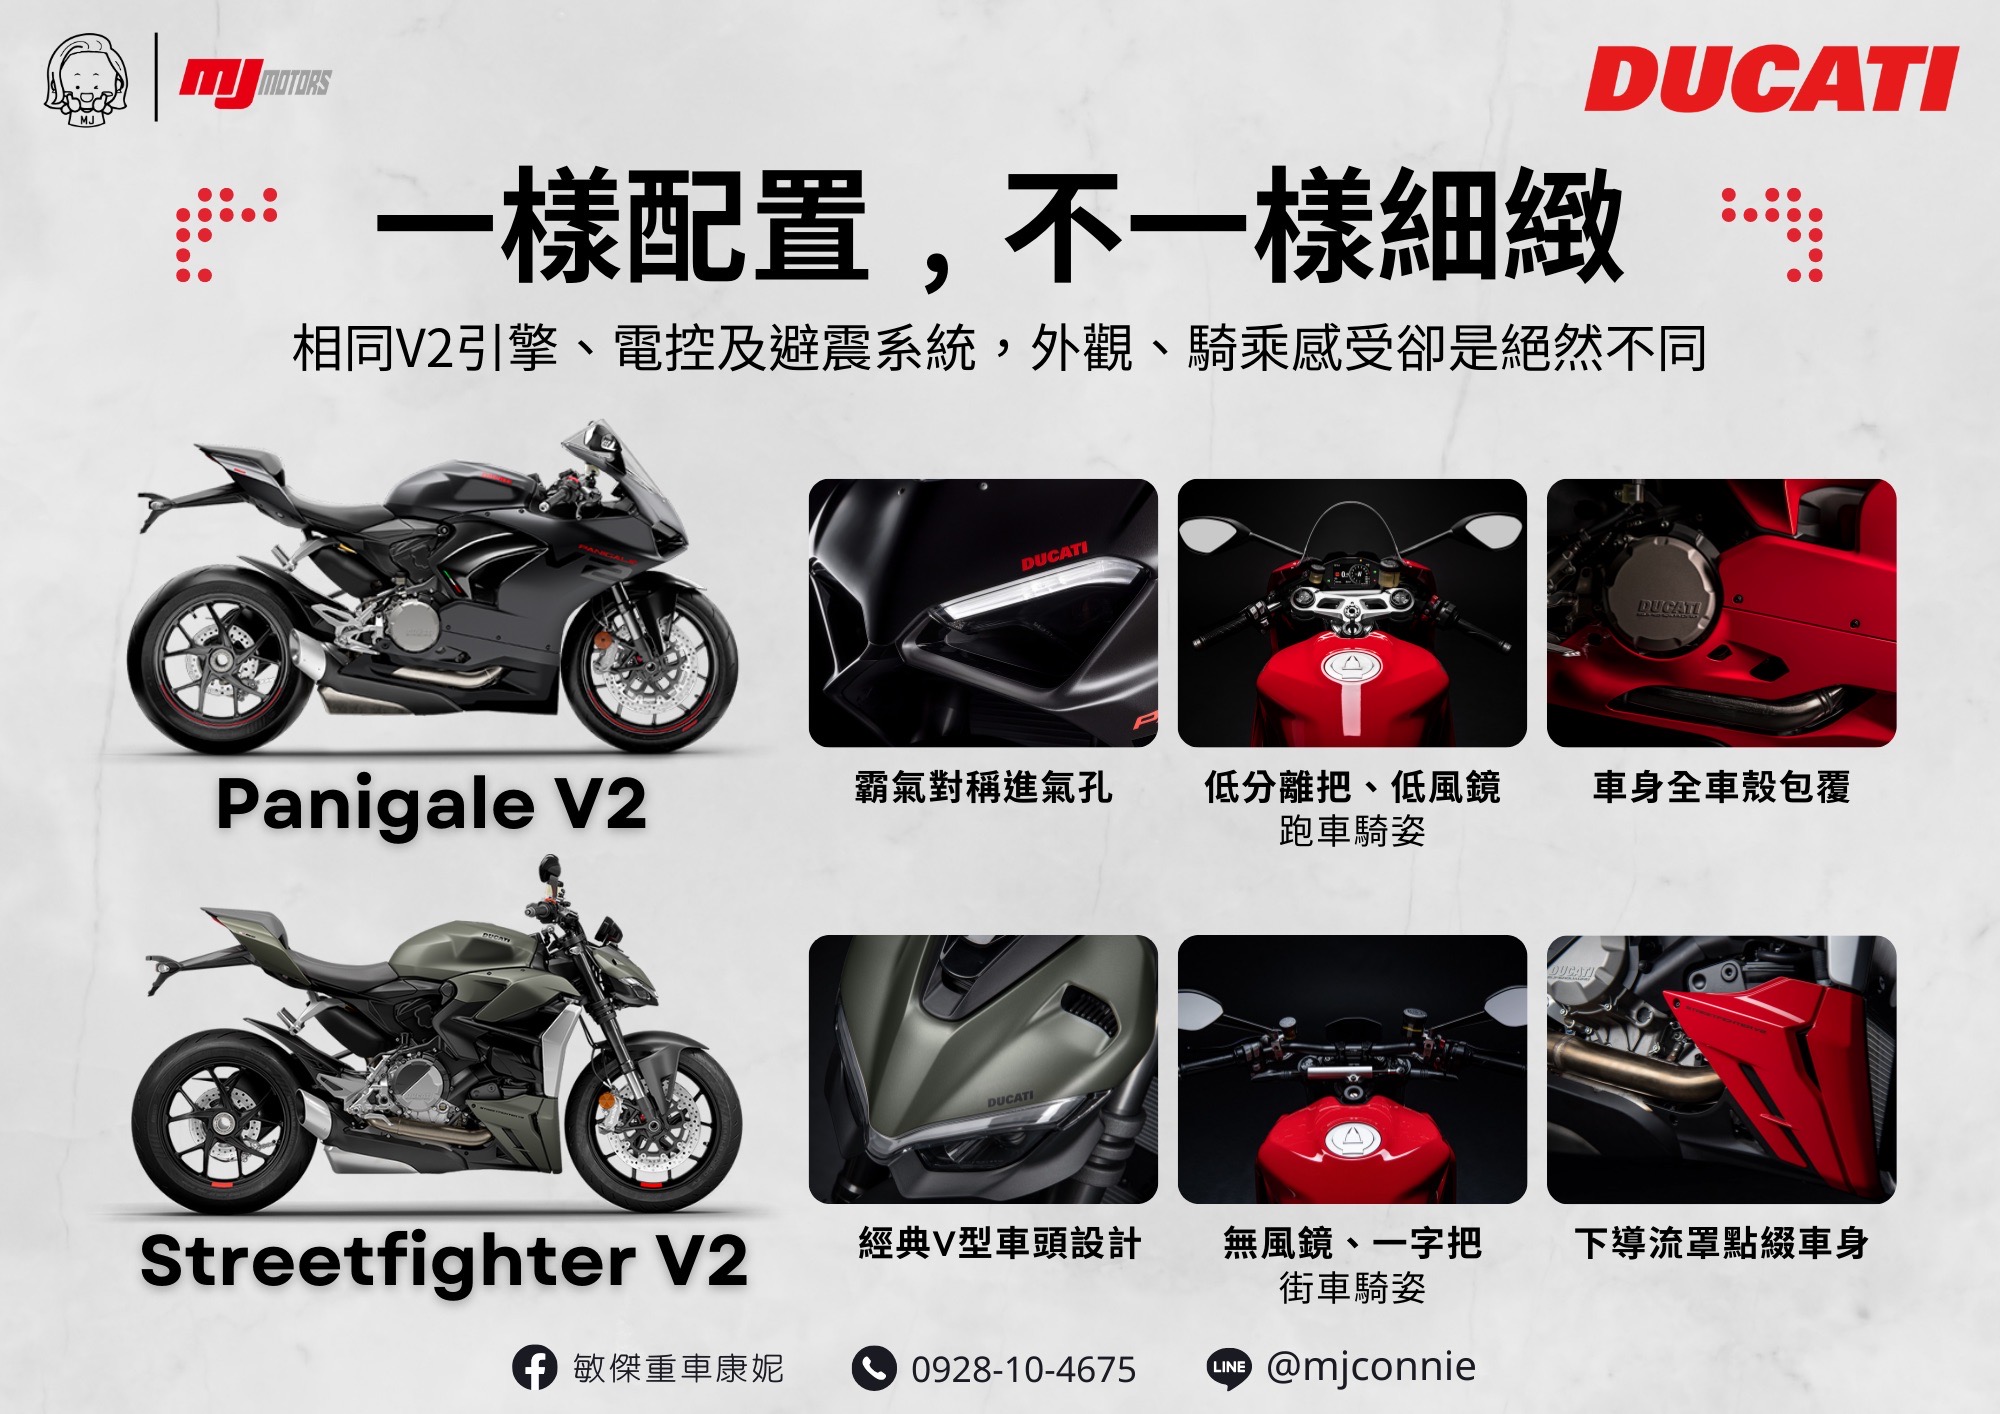 DUCATI PANIGALE V2新車出售中 『敏傑康妮』Ducati Panigale V2 StreetFighter V2 是時候升級~體驗杜卡迪車系的魅力了! | 敏傑車業資深銷售專員 康妮 Connie